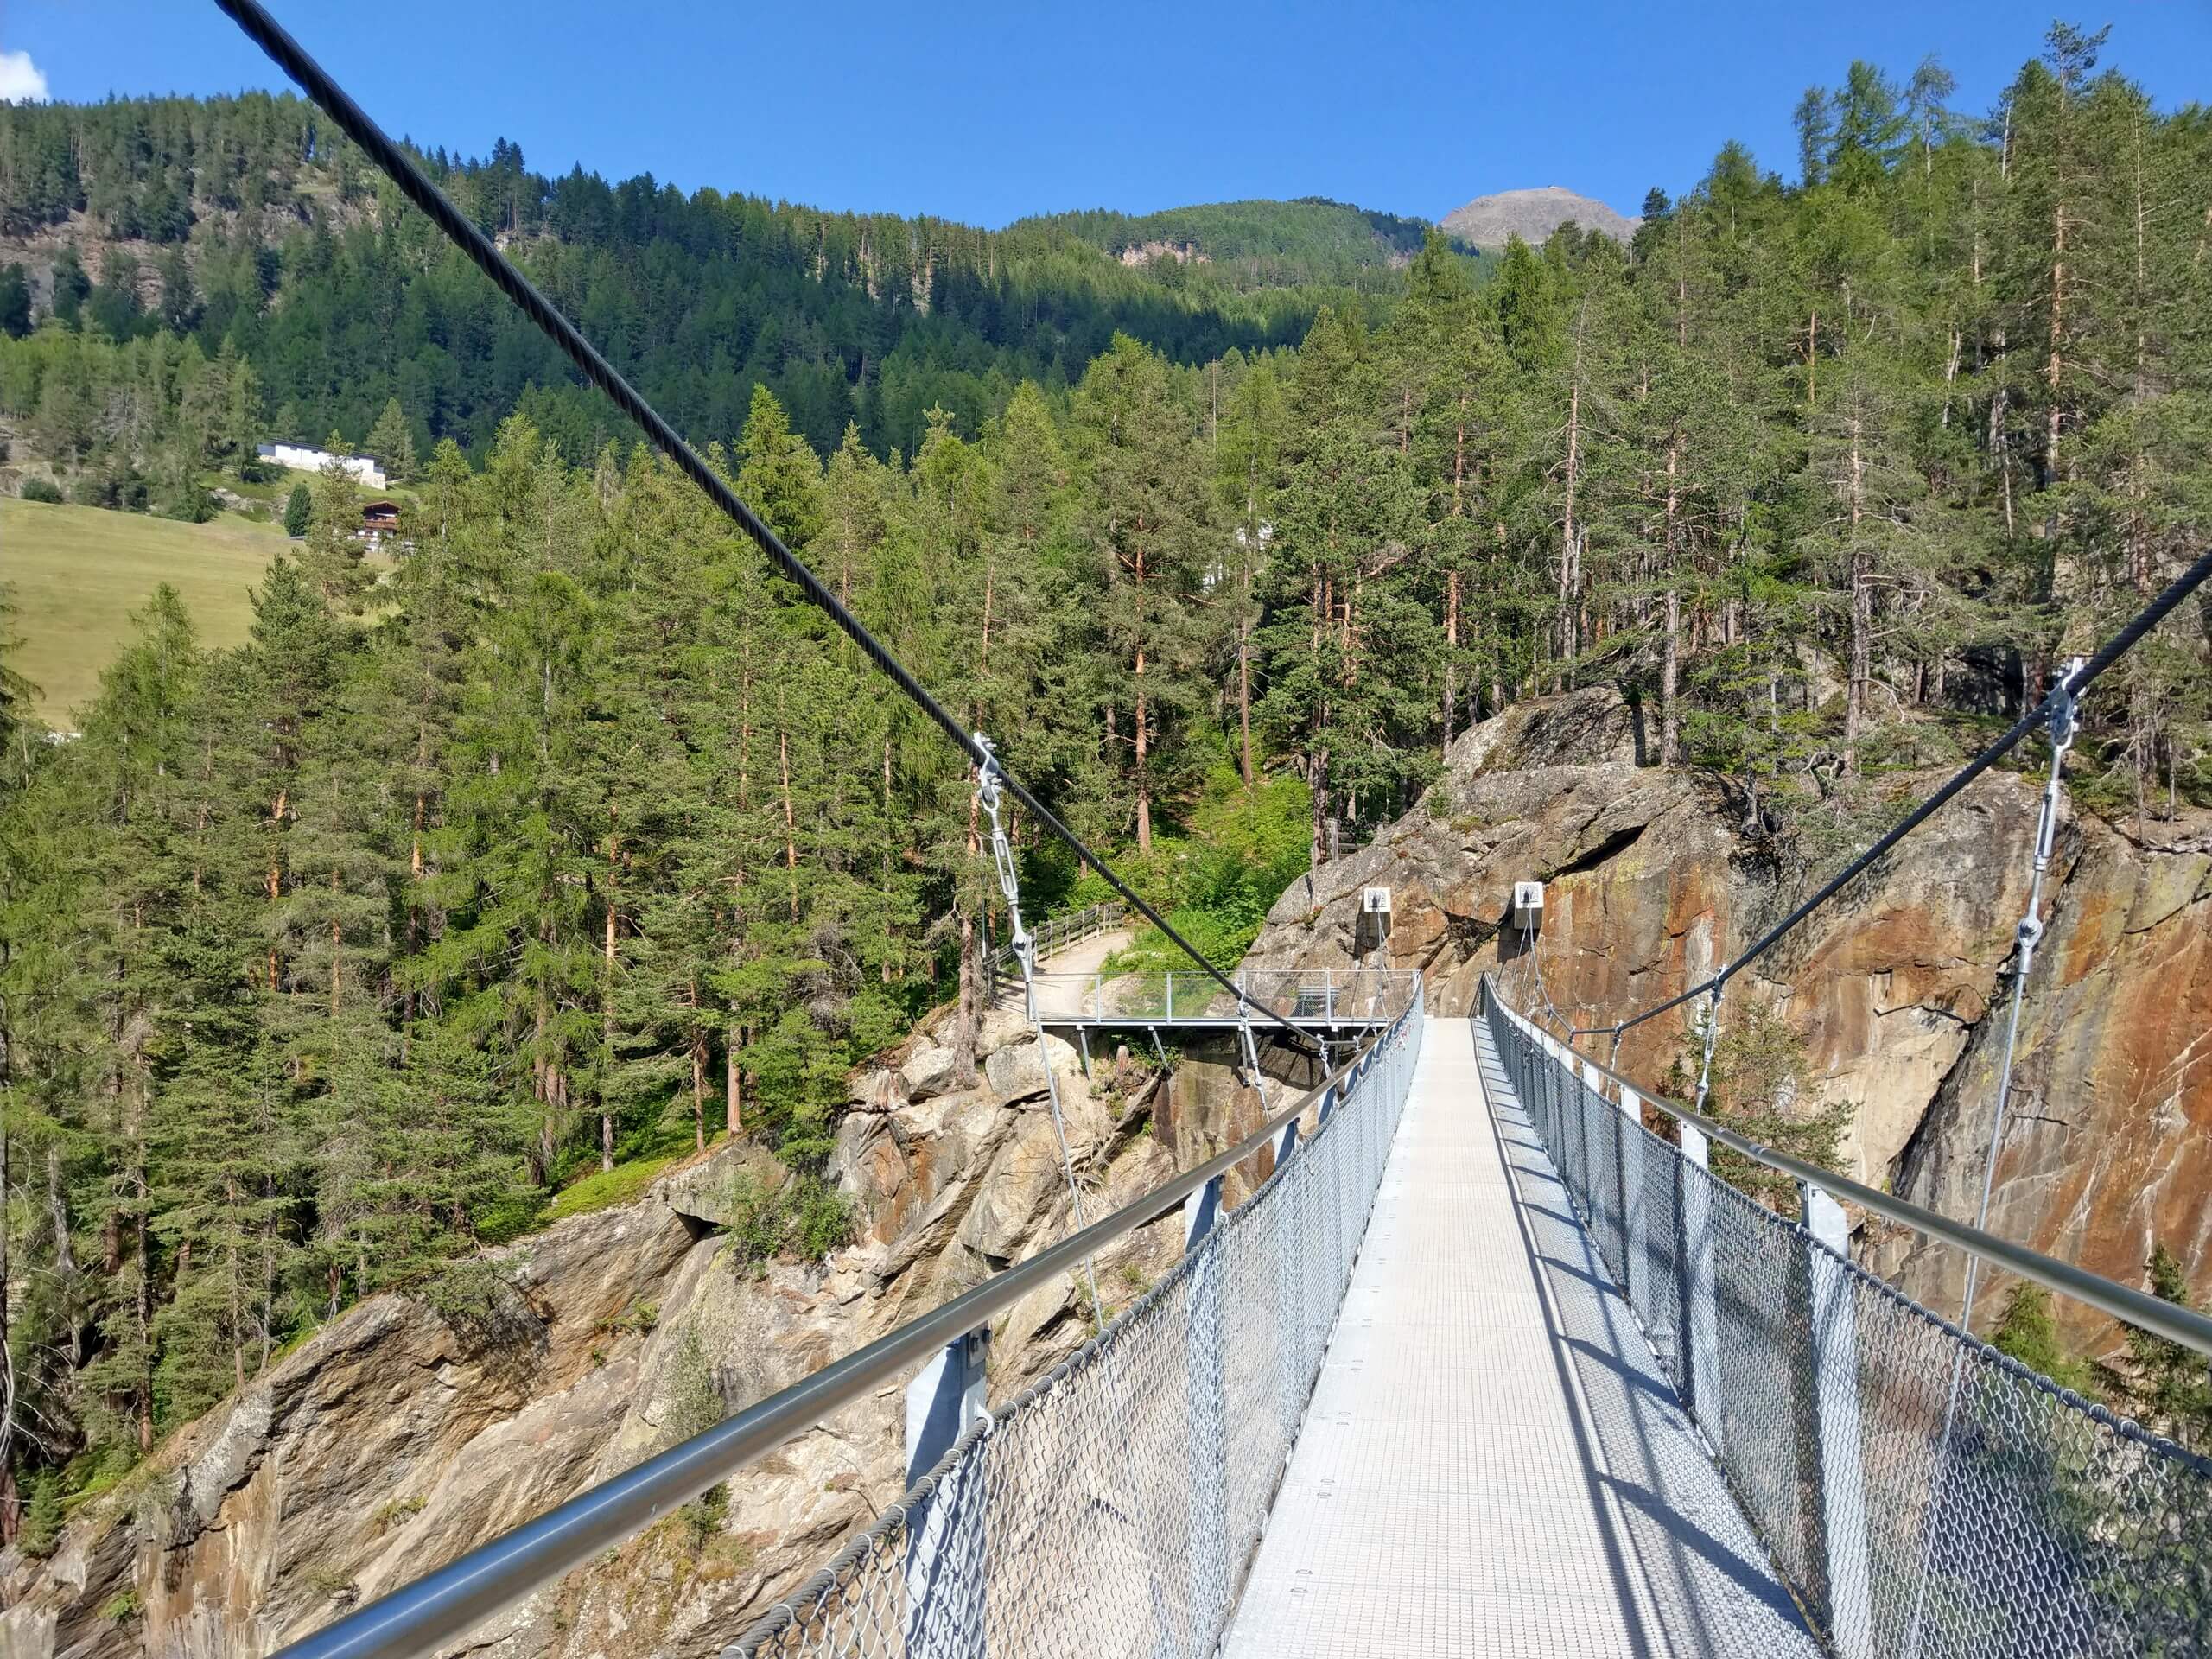 Crossing the high bridge in Alps